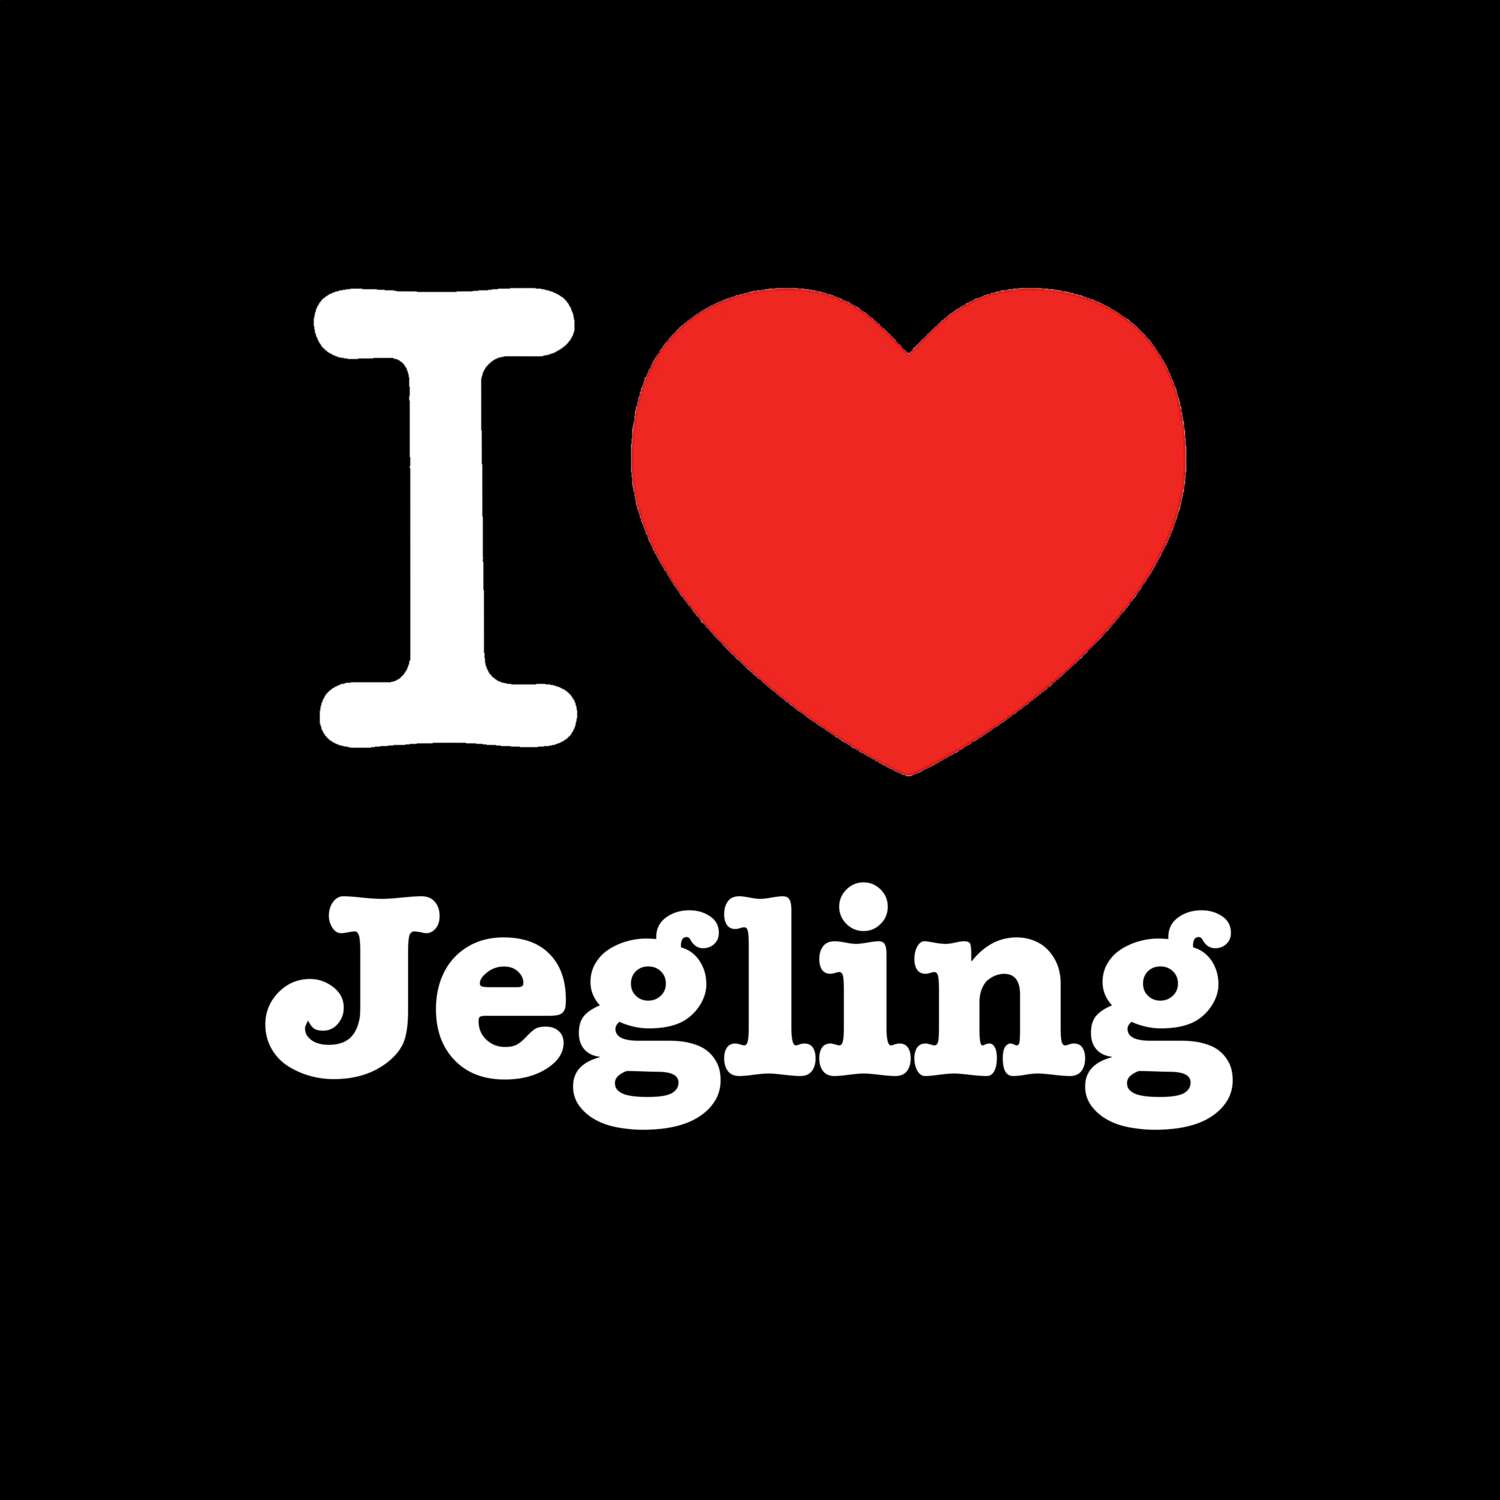 Jegling T-Shirt »I love«